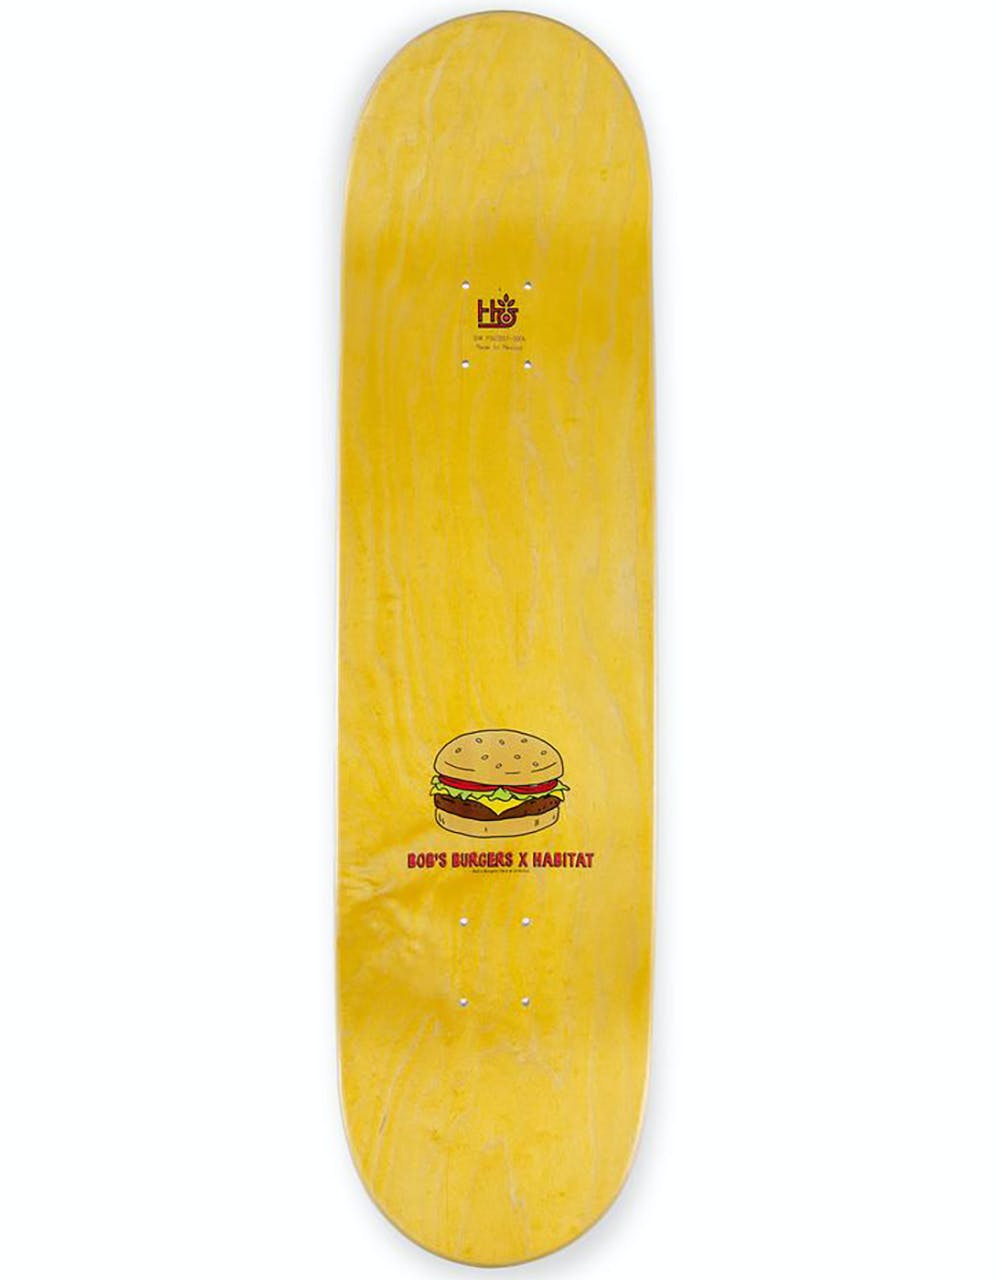 Habitat x Bob's Burgers Suciu Skateboard Deck - 8"